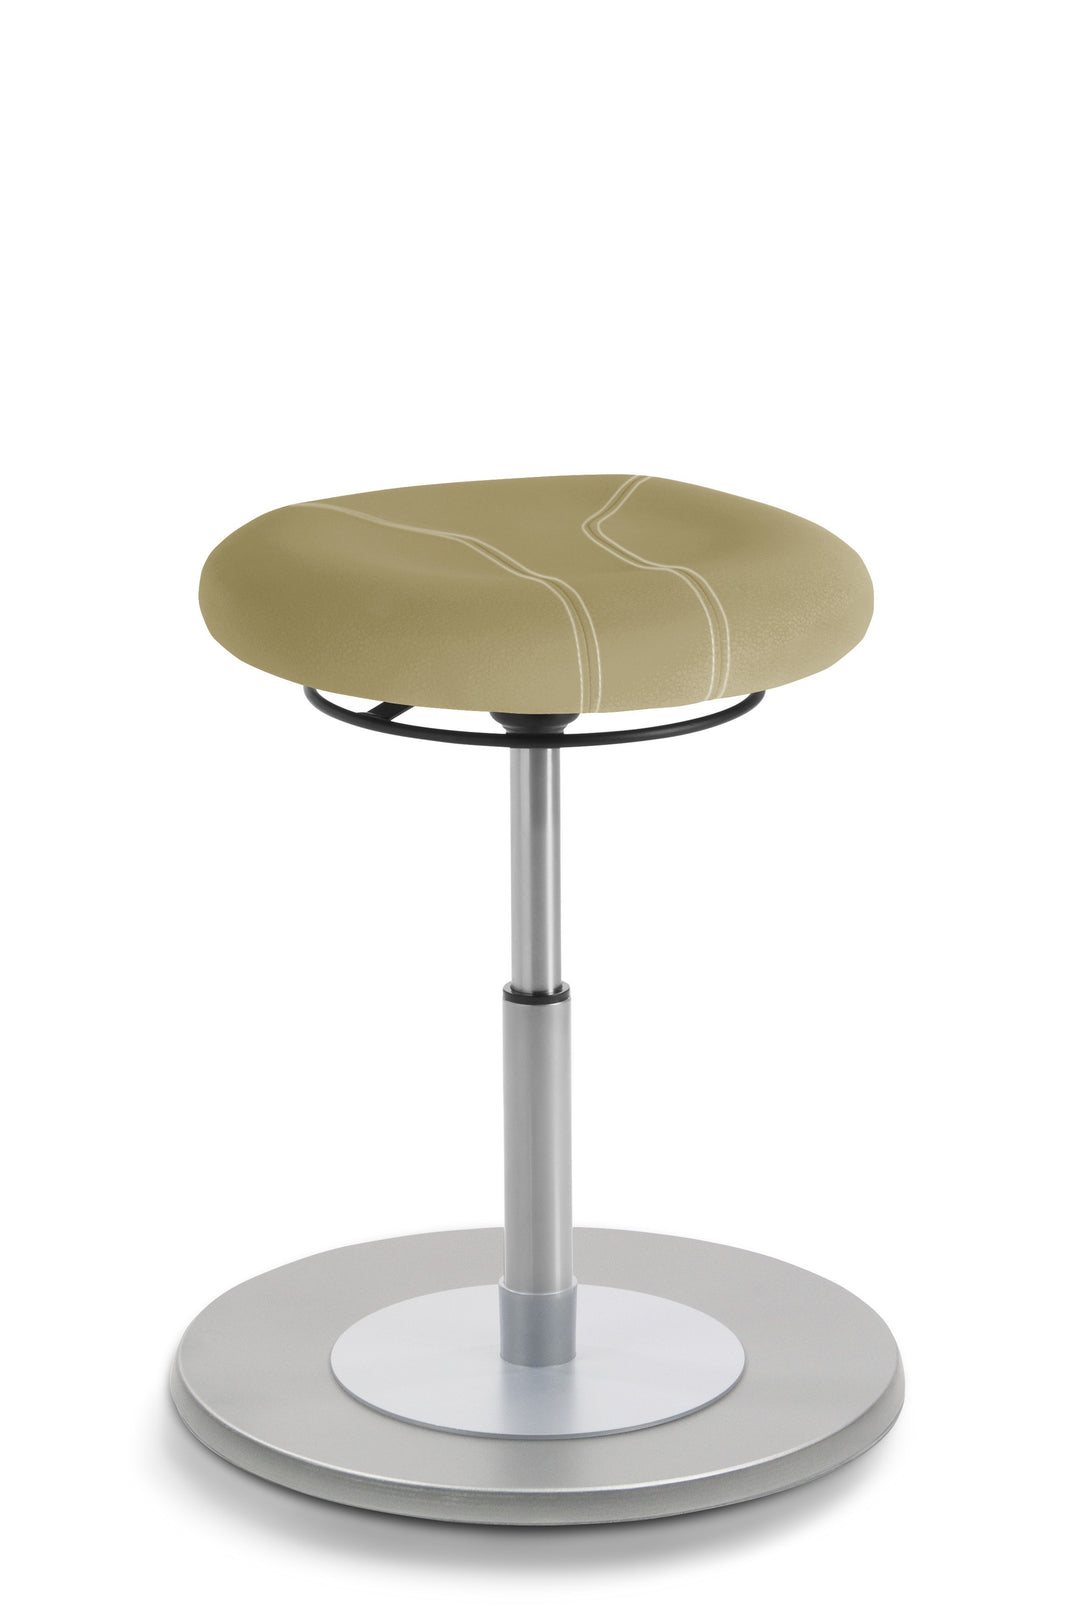 Mayer MyErgosit Taboret Krzesło Stołek balansujący płaski 37-50cm podstawa srebrna 1111 EF